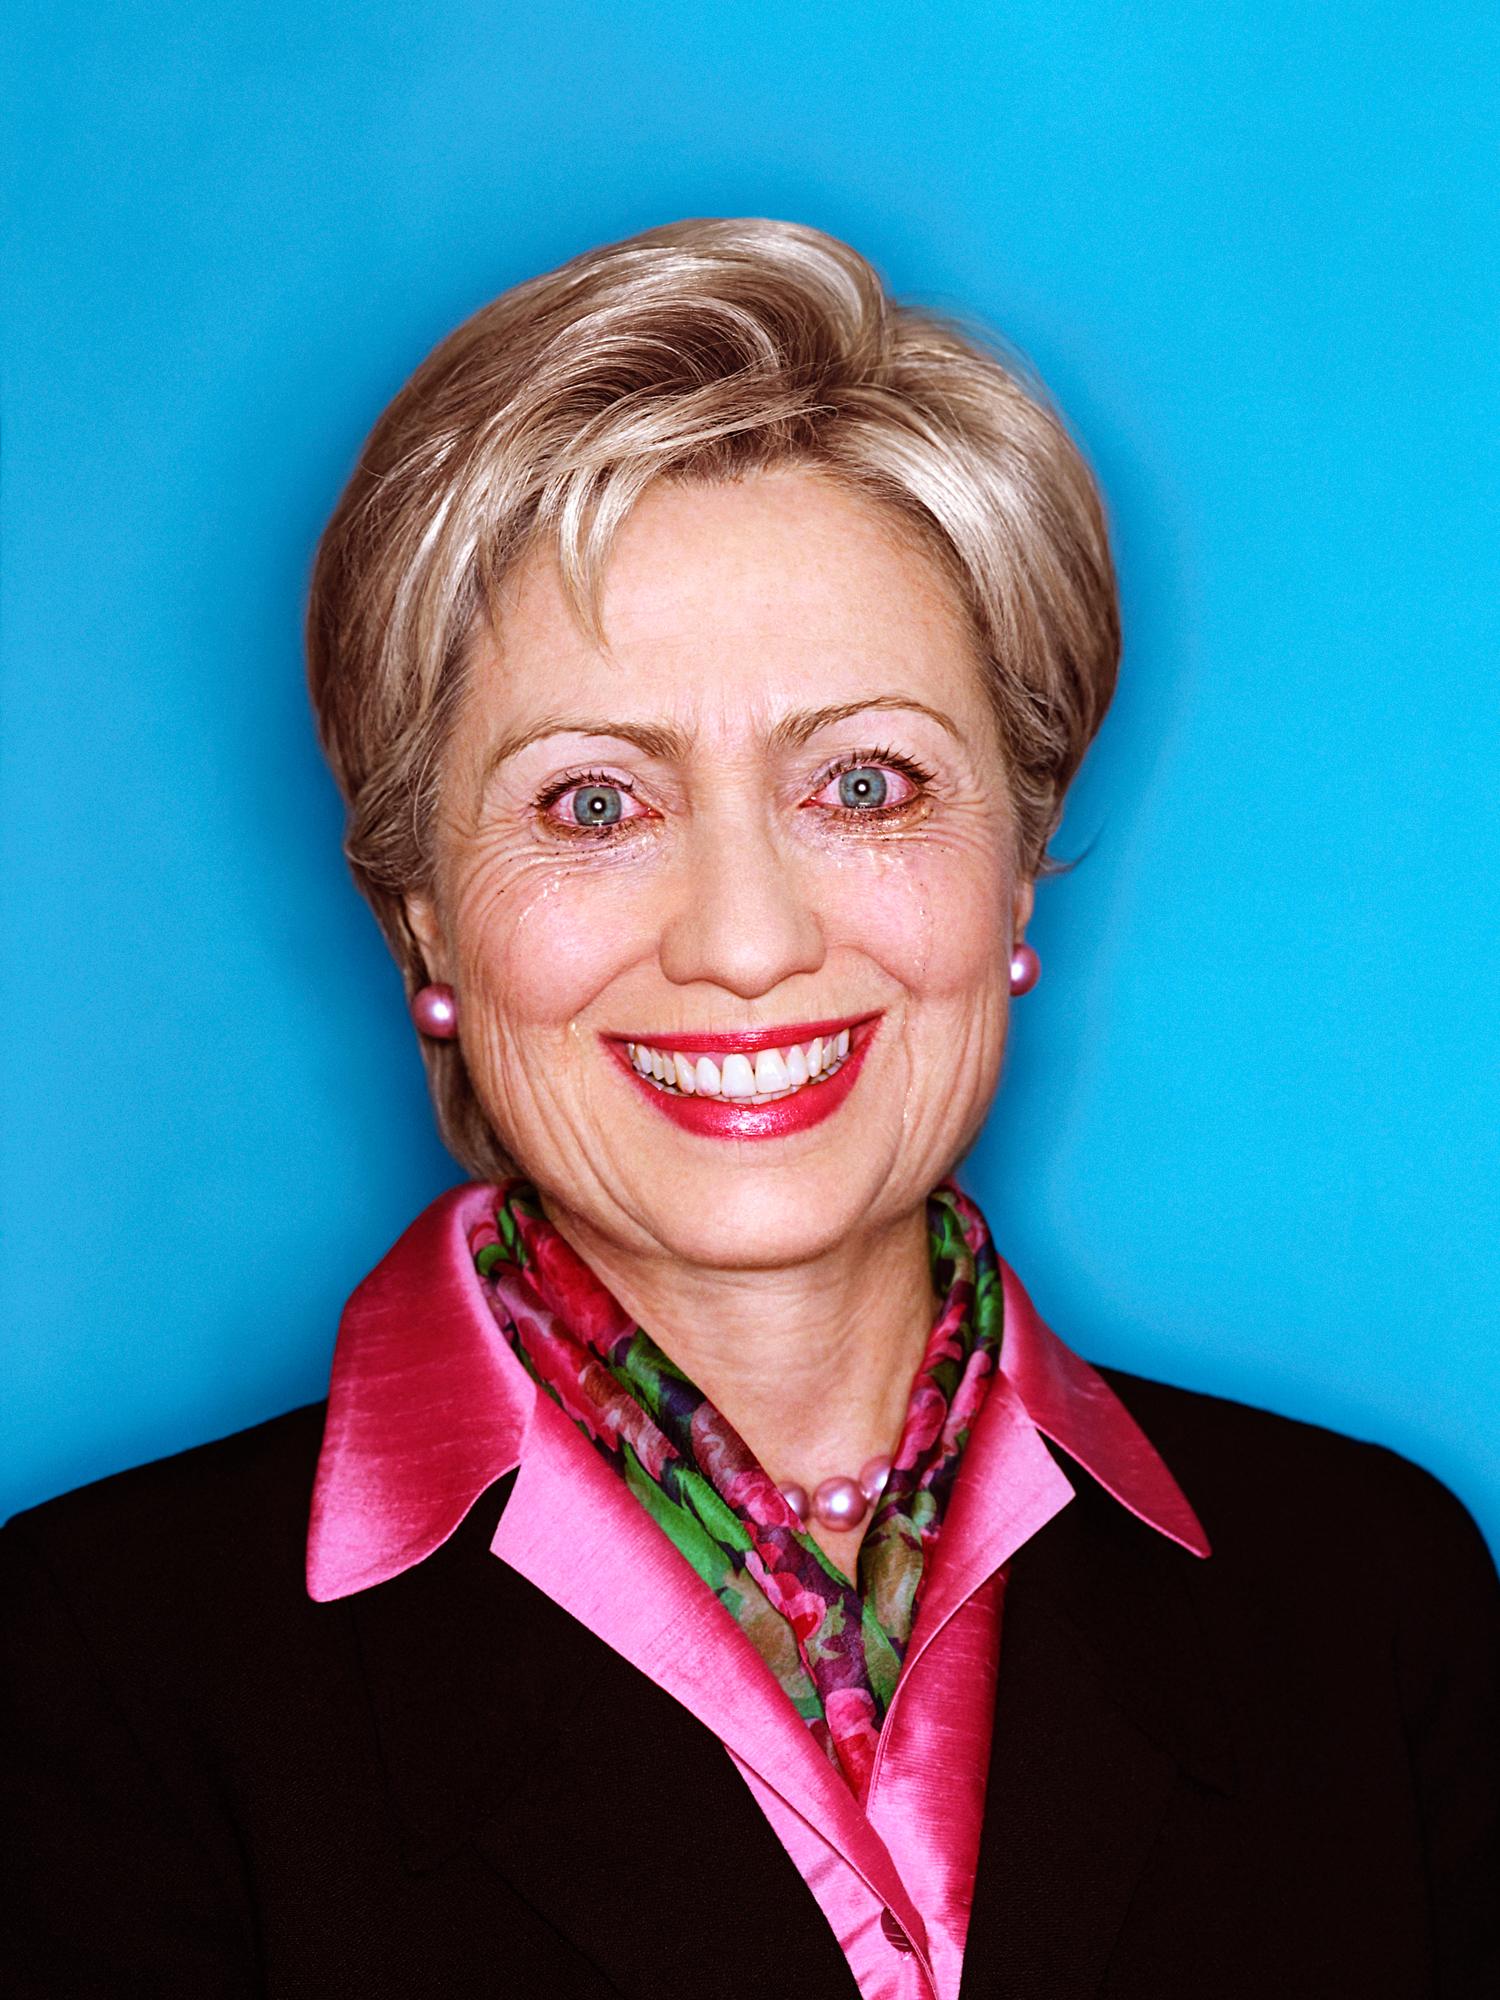 David LaChapelle Color Photograph - Hillary Clinton: Politicians Paradox